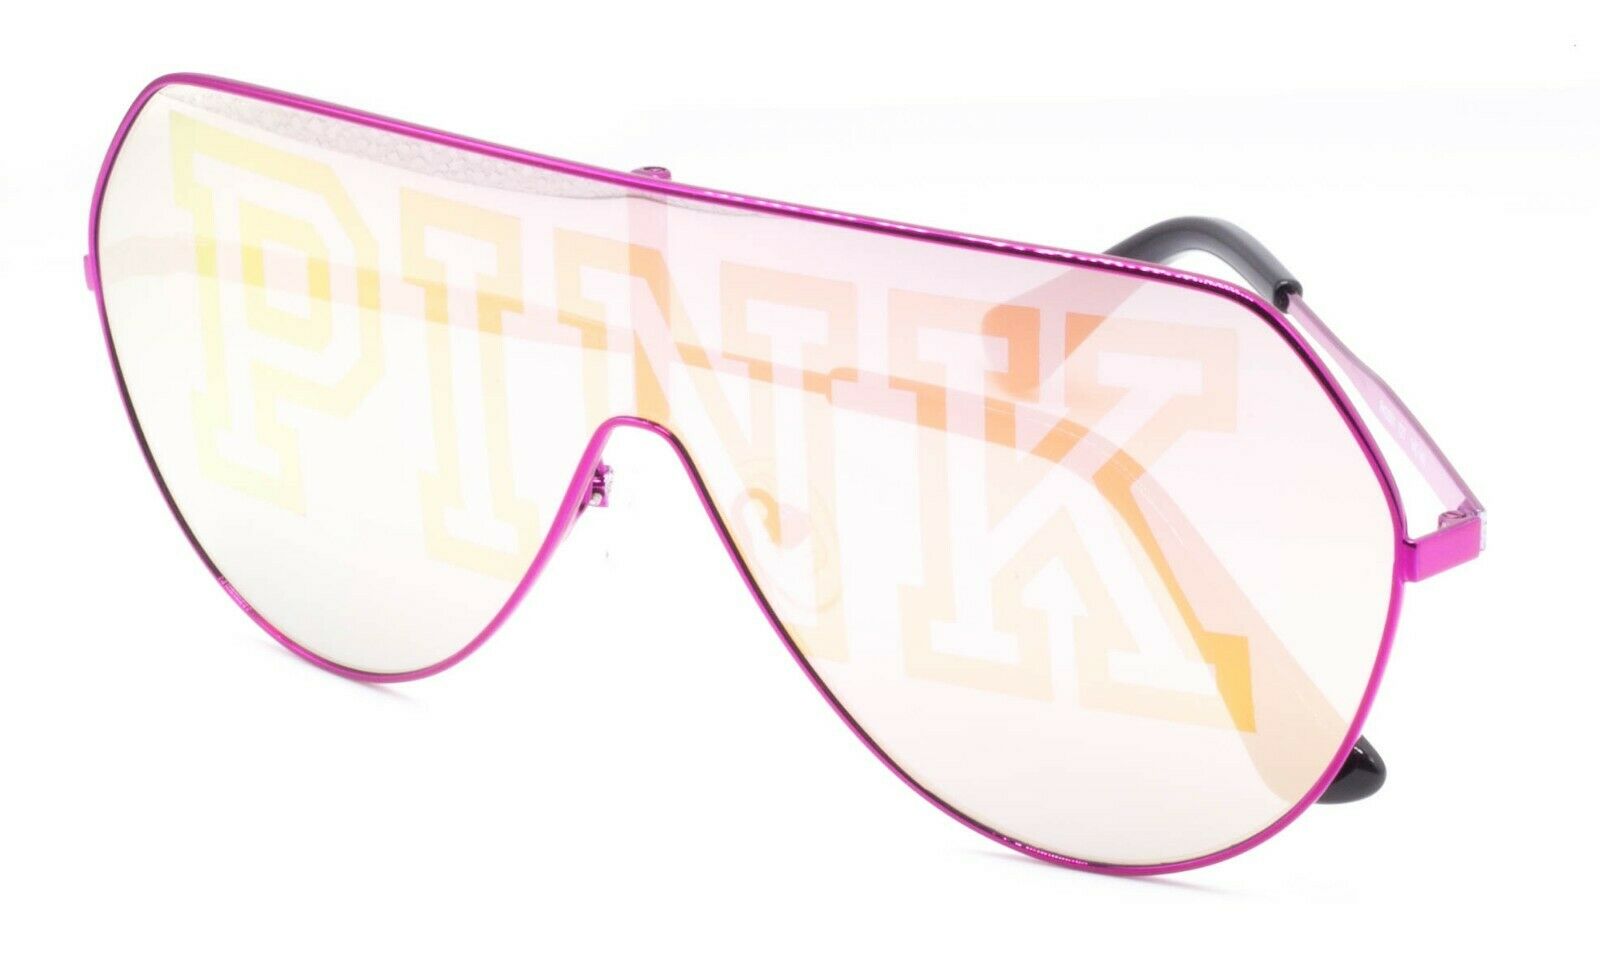 PINK VICTORIA'S SECRET PK0001 72T 140mm Fashion Accessory Sunglasses Shades -New